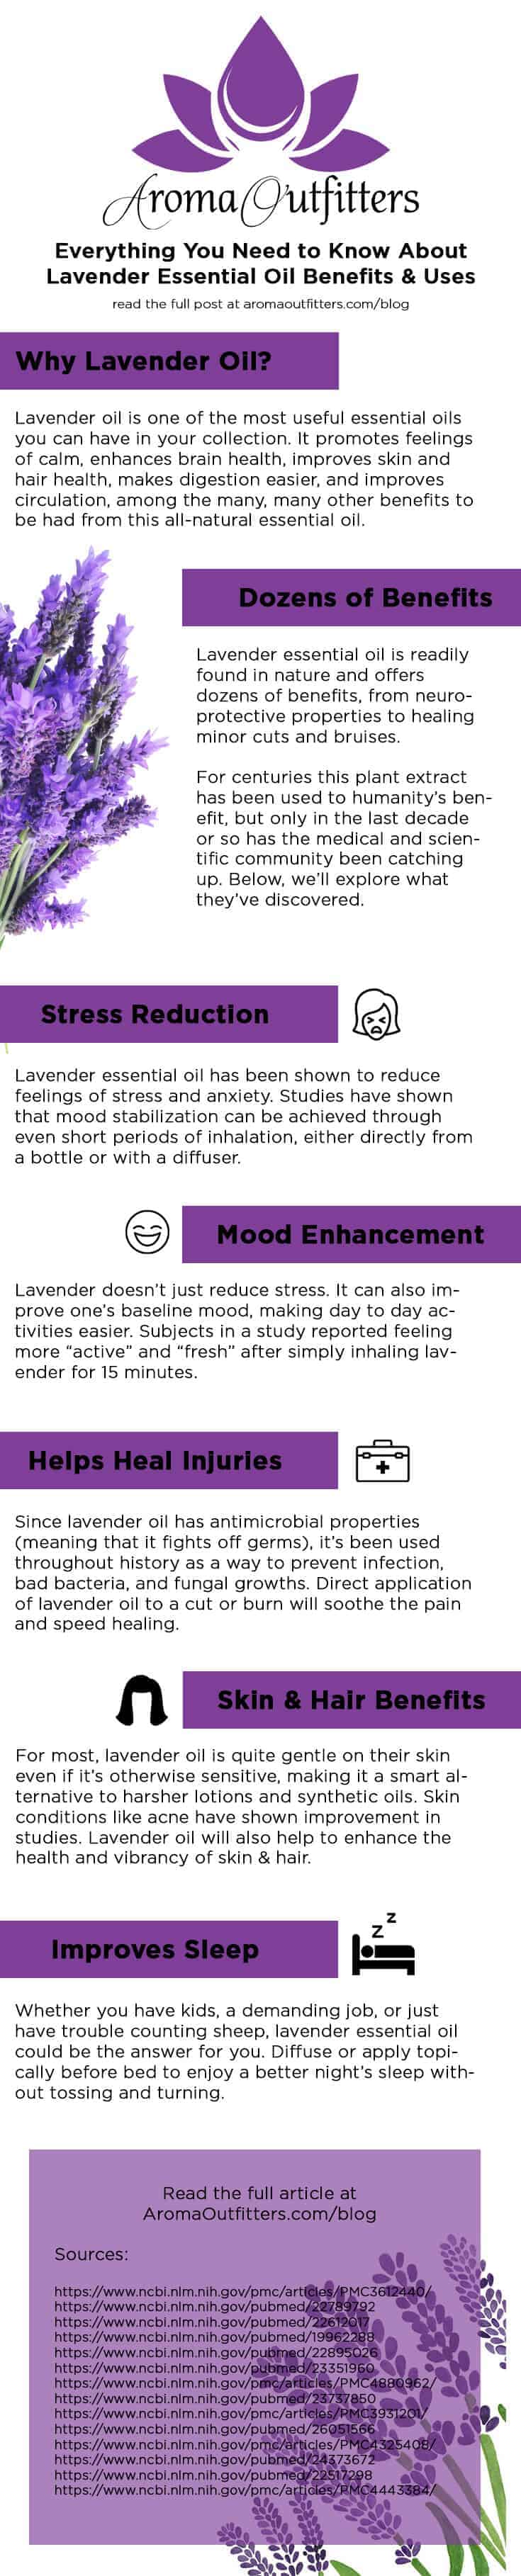 lavender oil benefits infographic